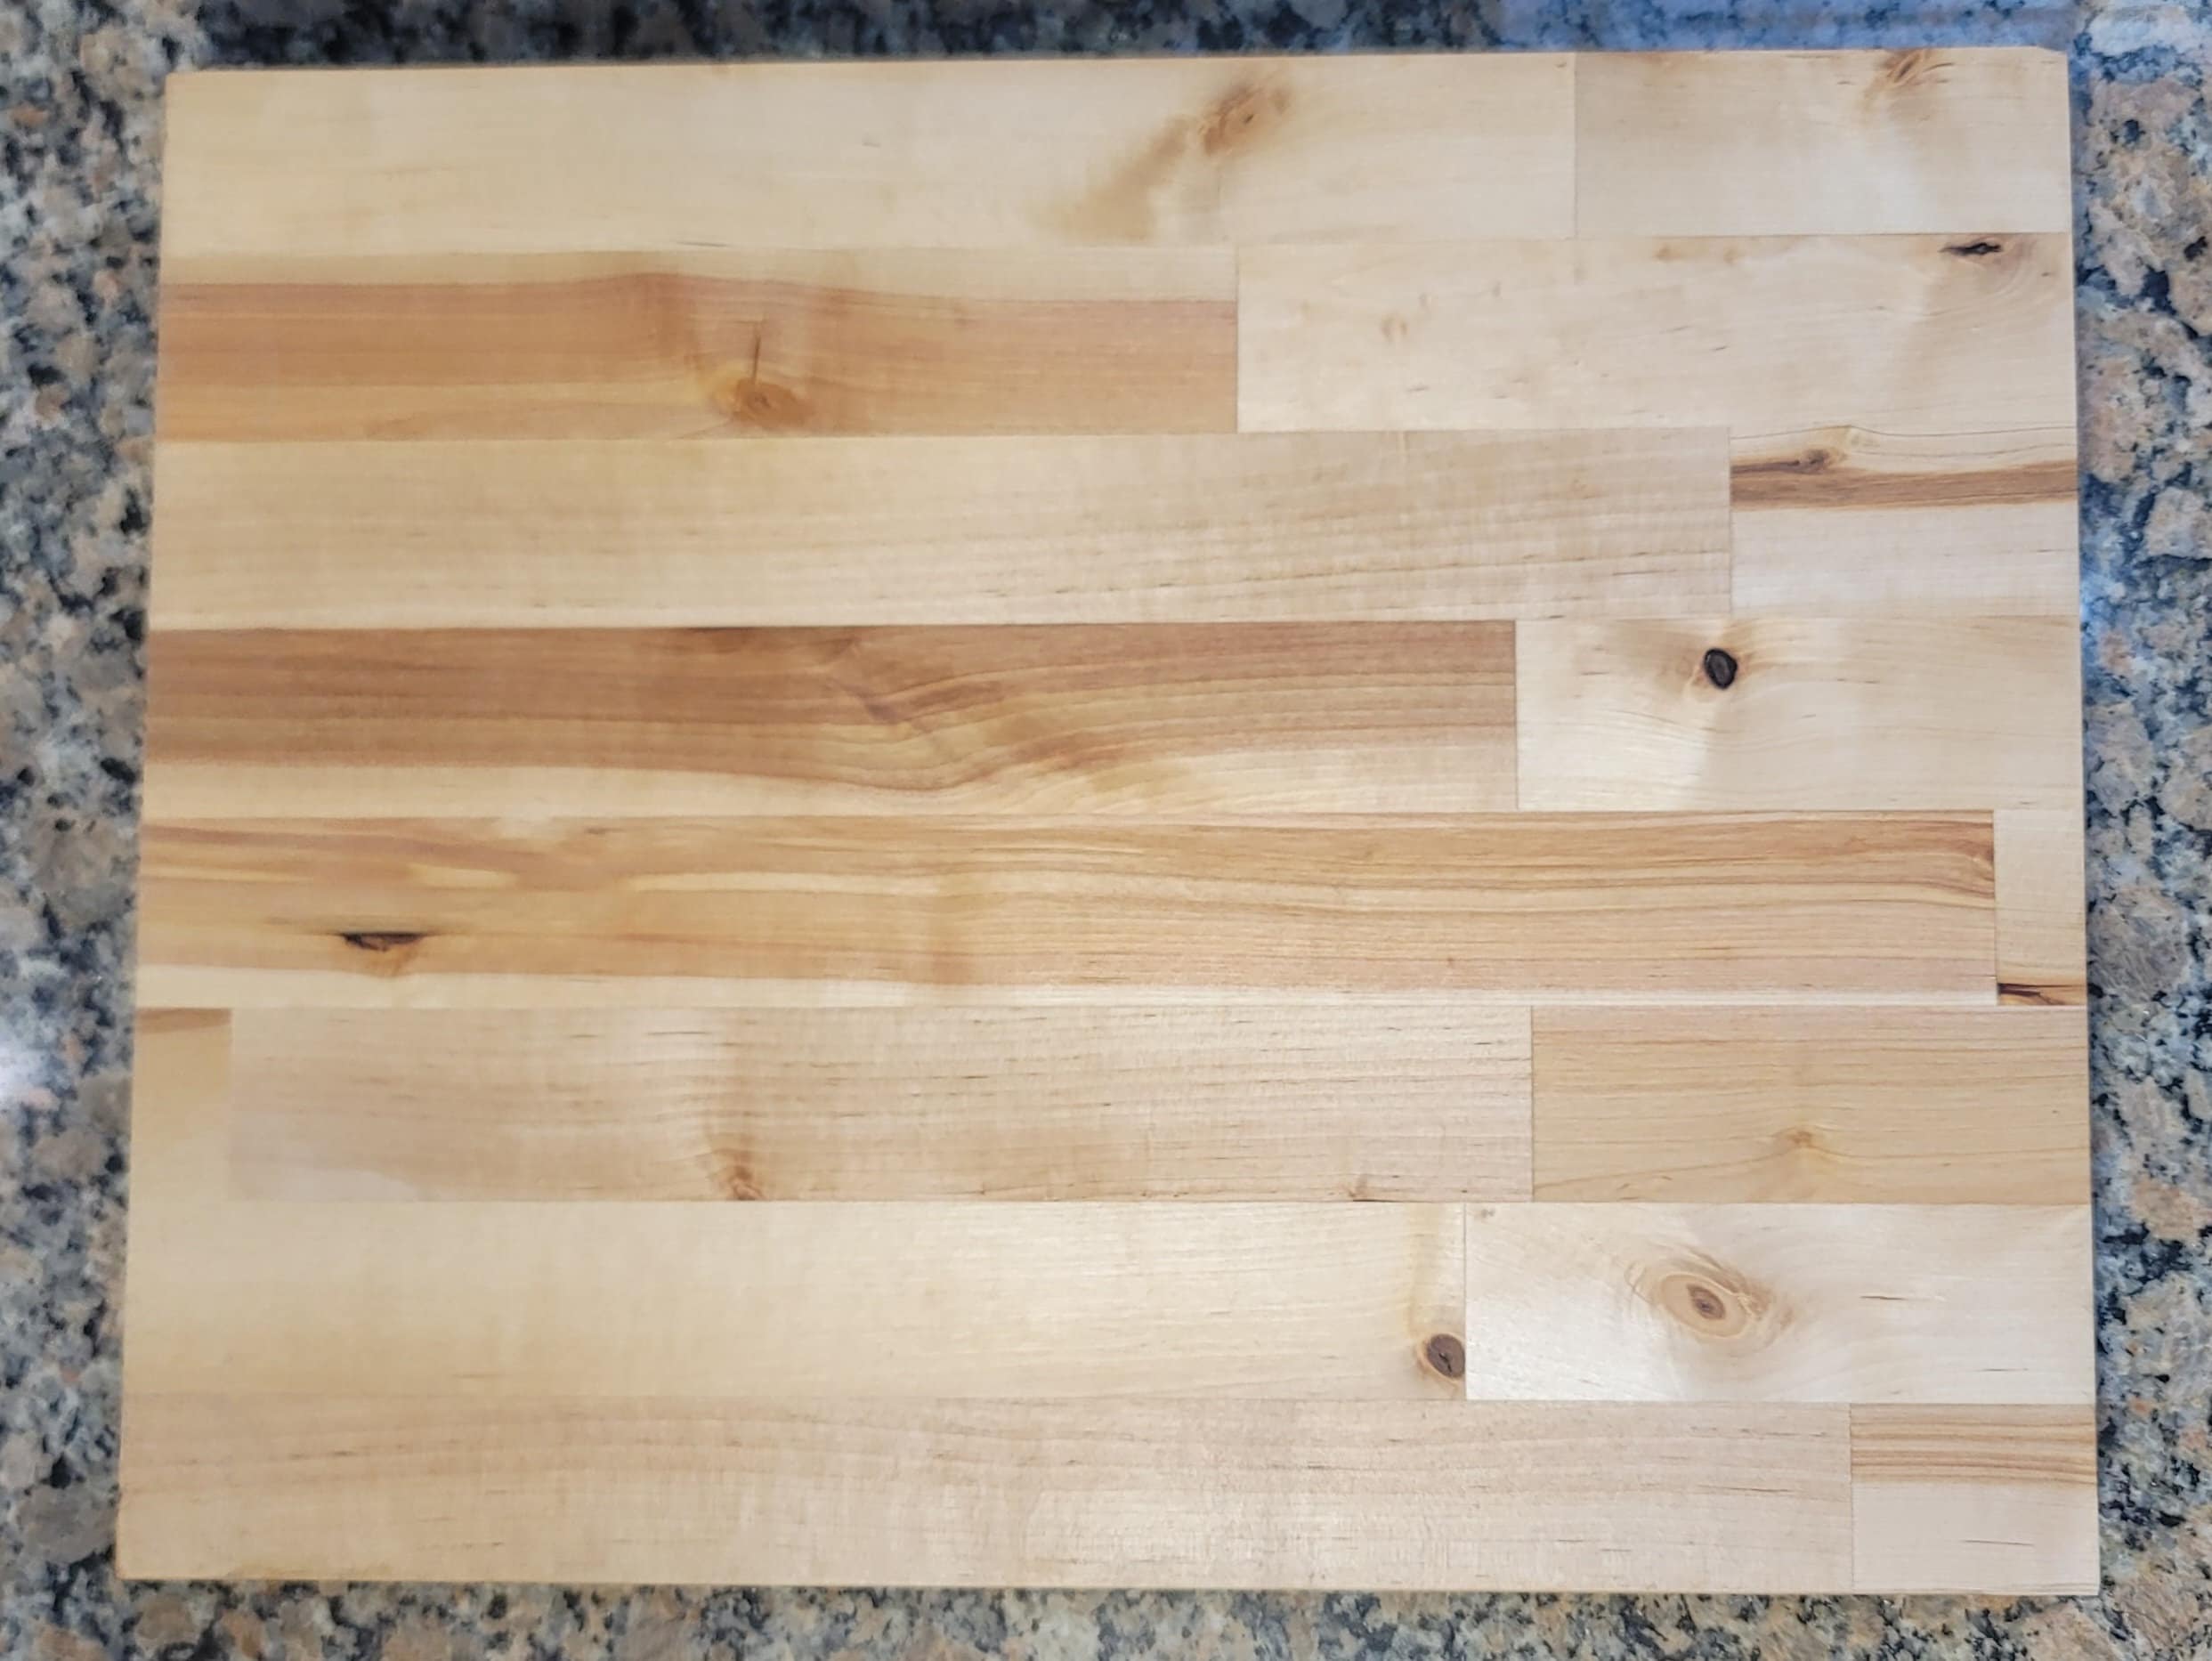 Round Birch Cutting Board with Paddle – Eaglecreek Boards